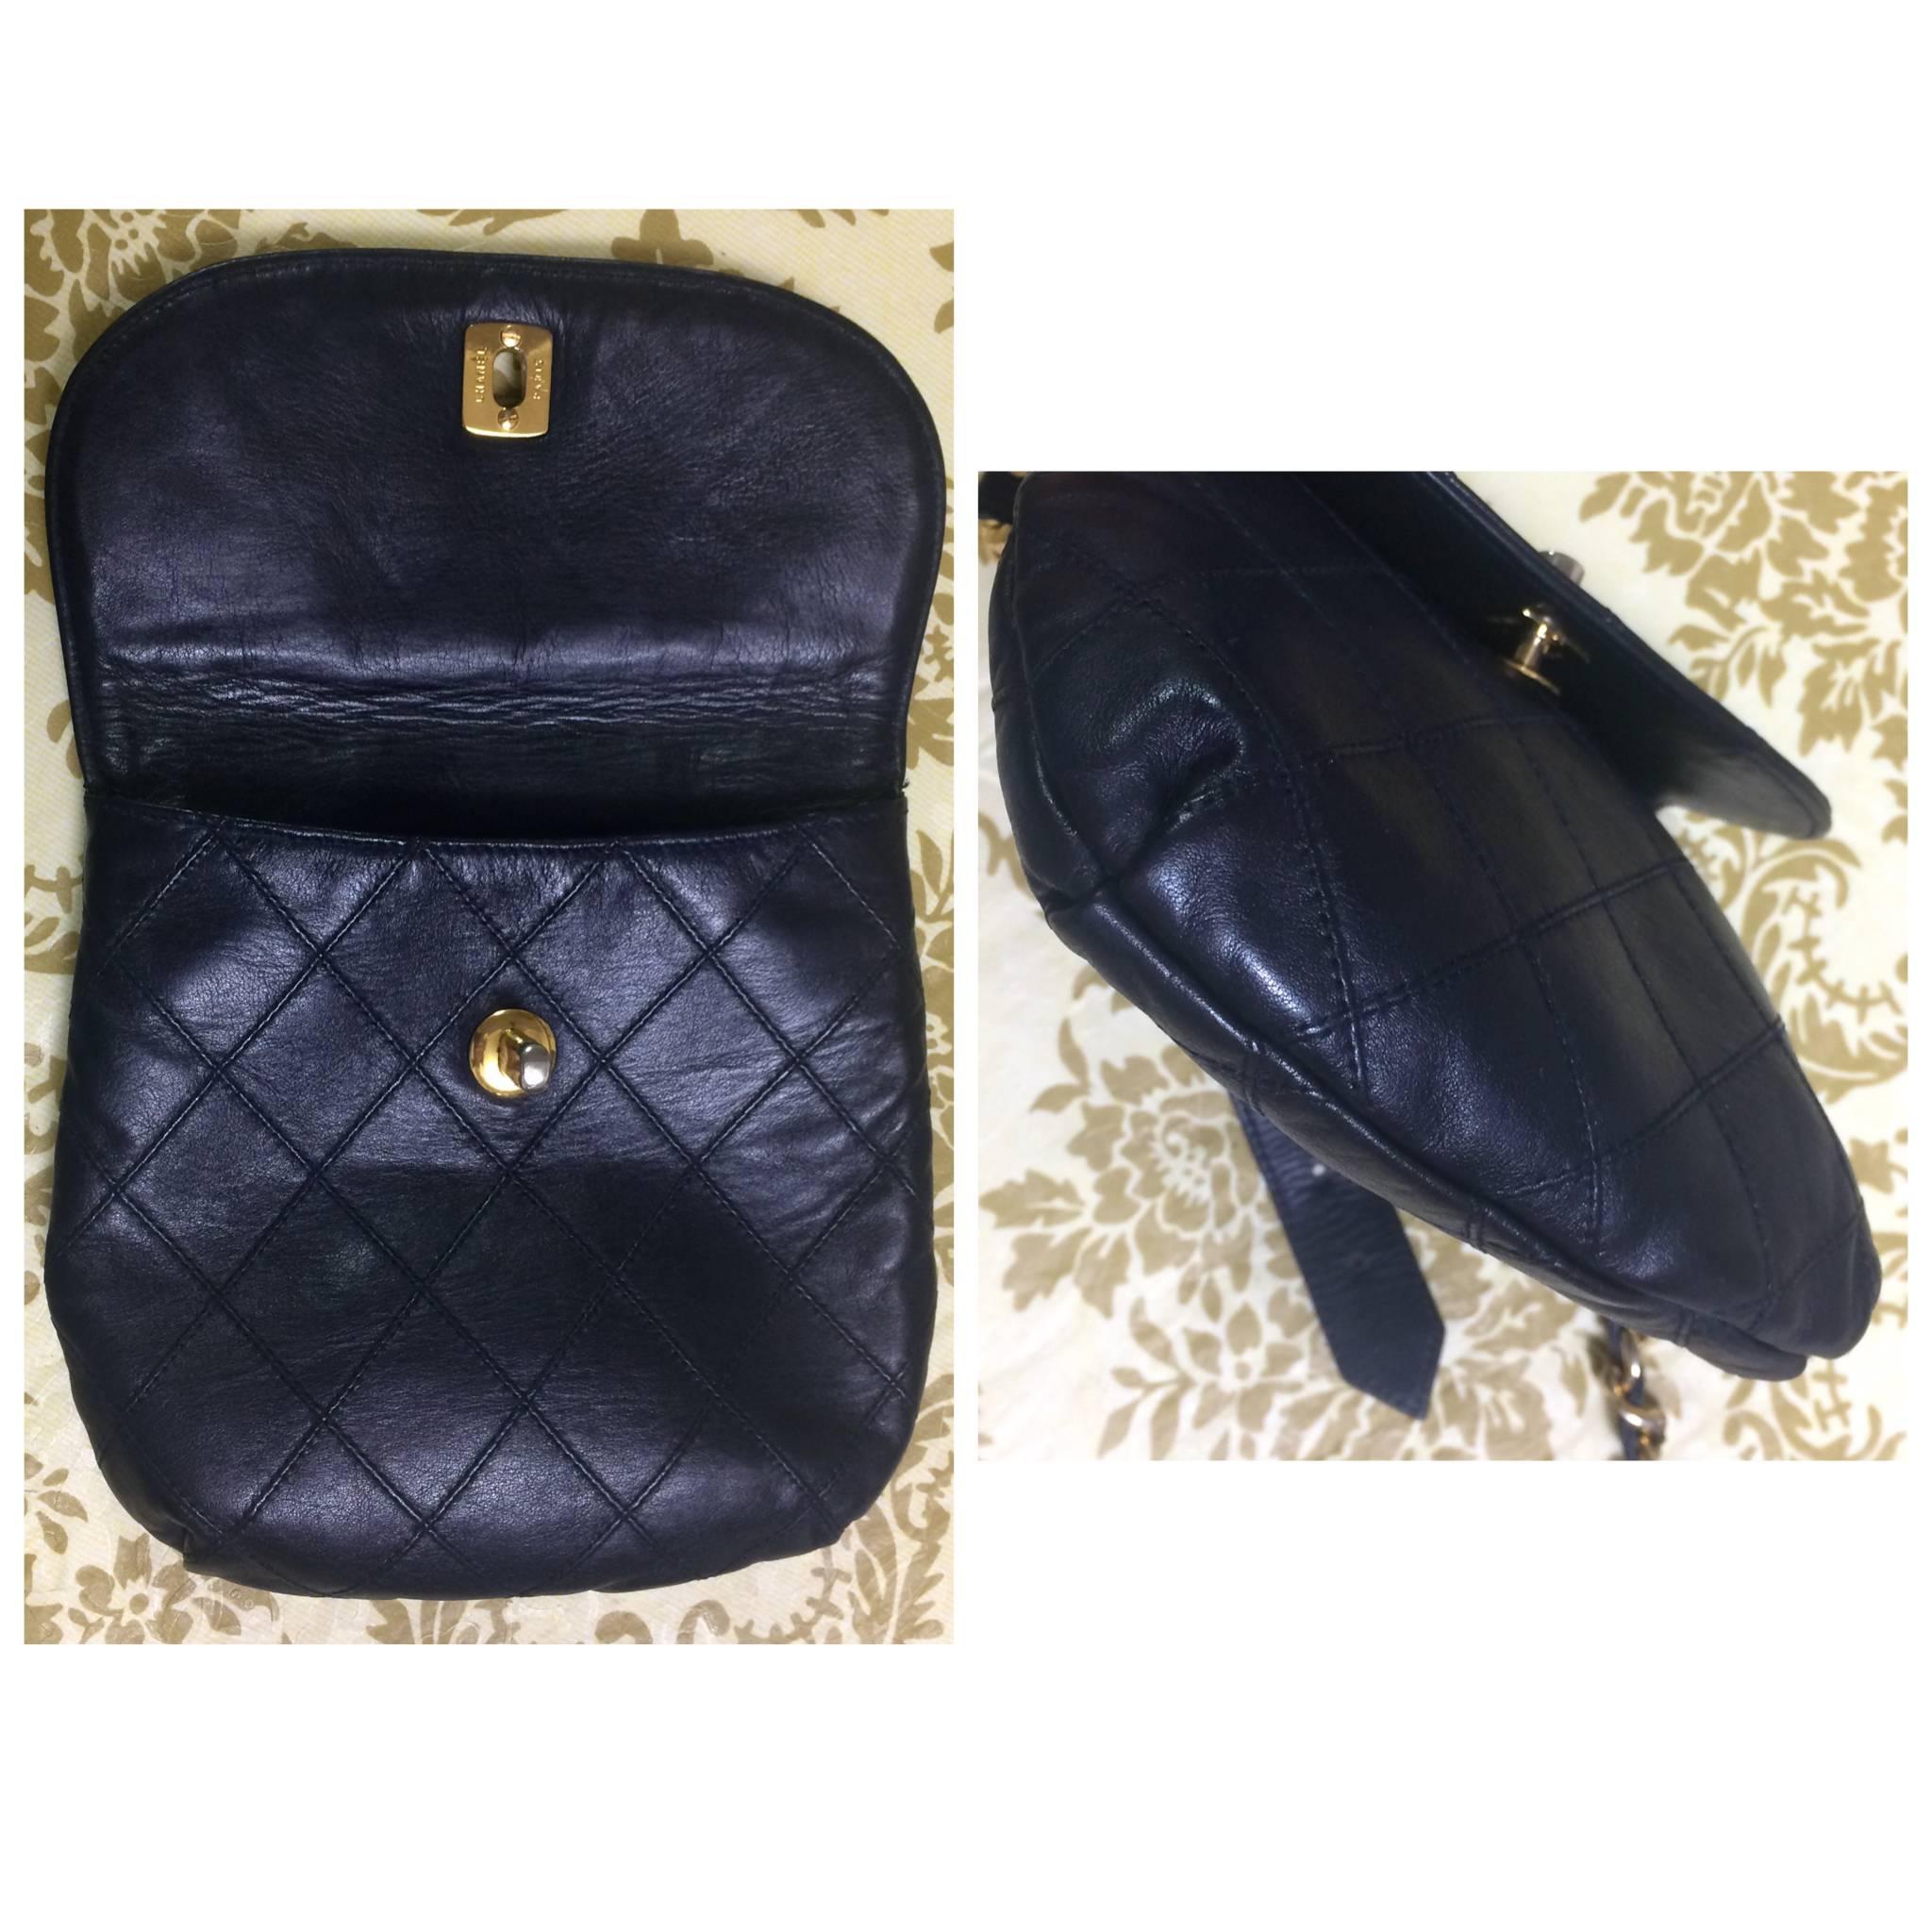 Vintage CHANEL dark navy leather waist purse, fanny pack with golden chain belt. 2